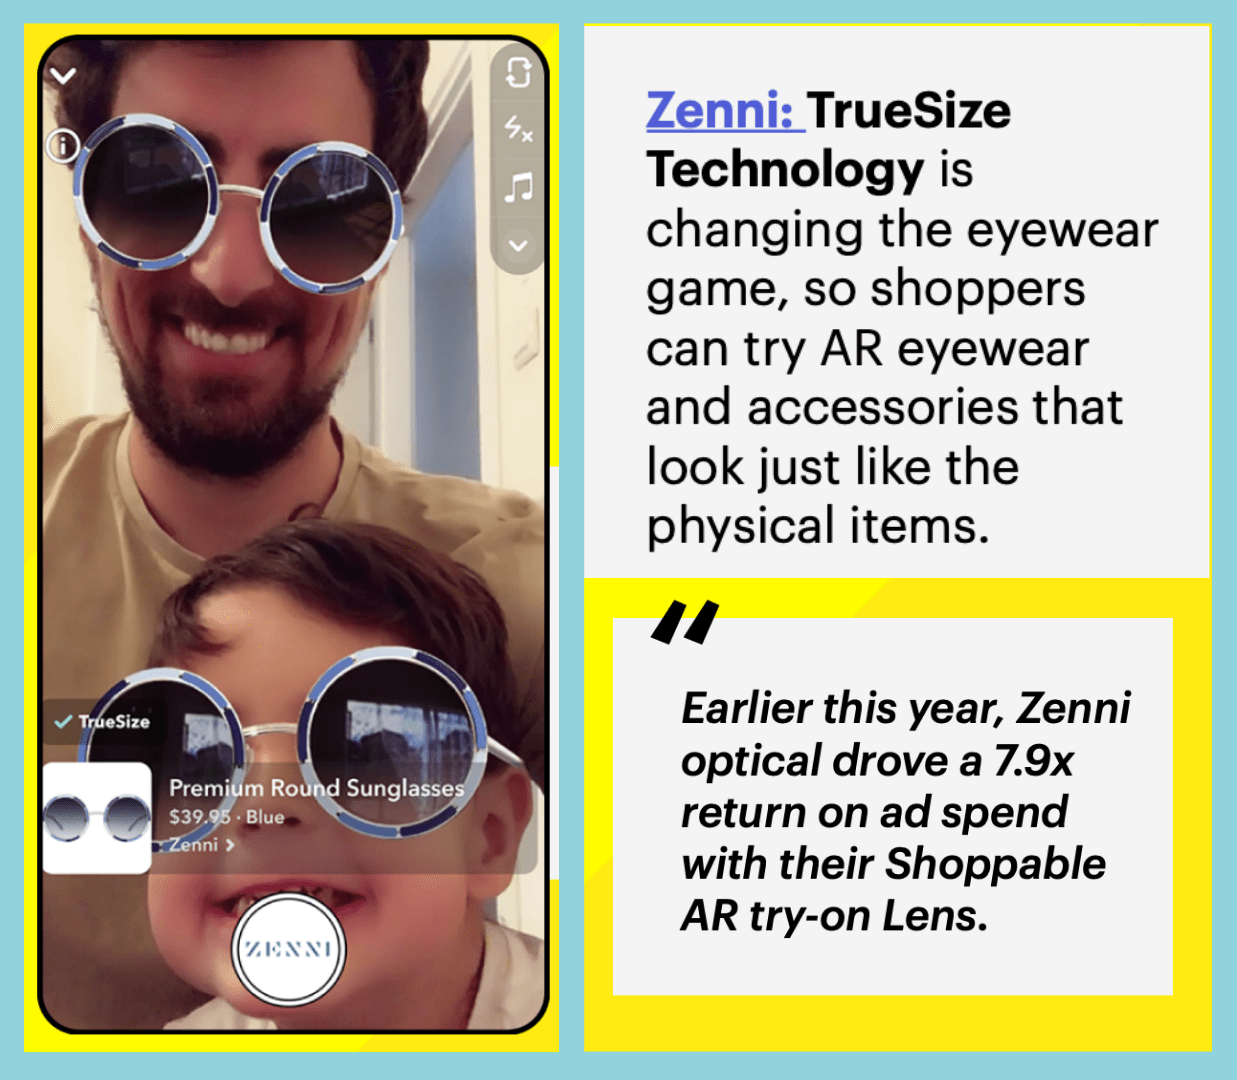 Zenni's Snap AR campaign drove 7.9x ROAS